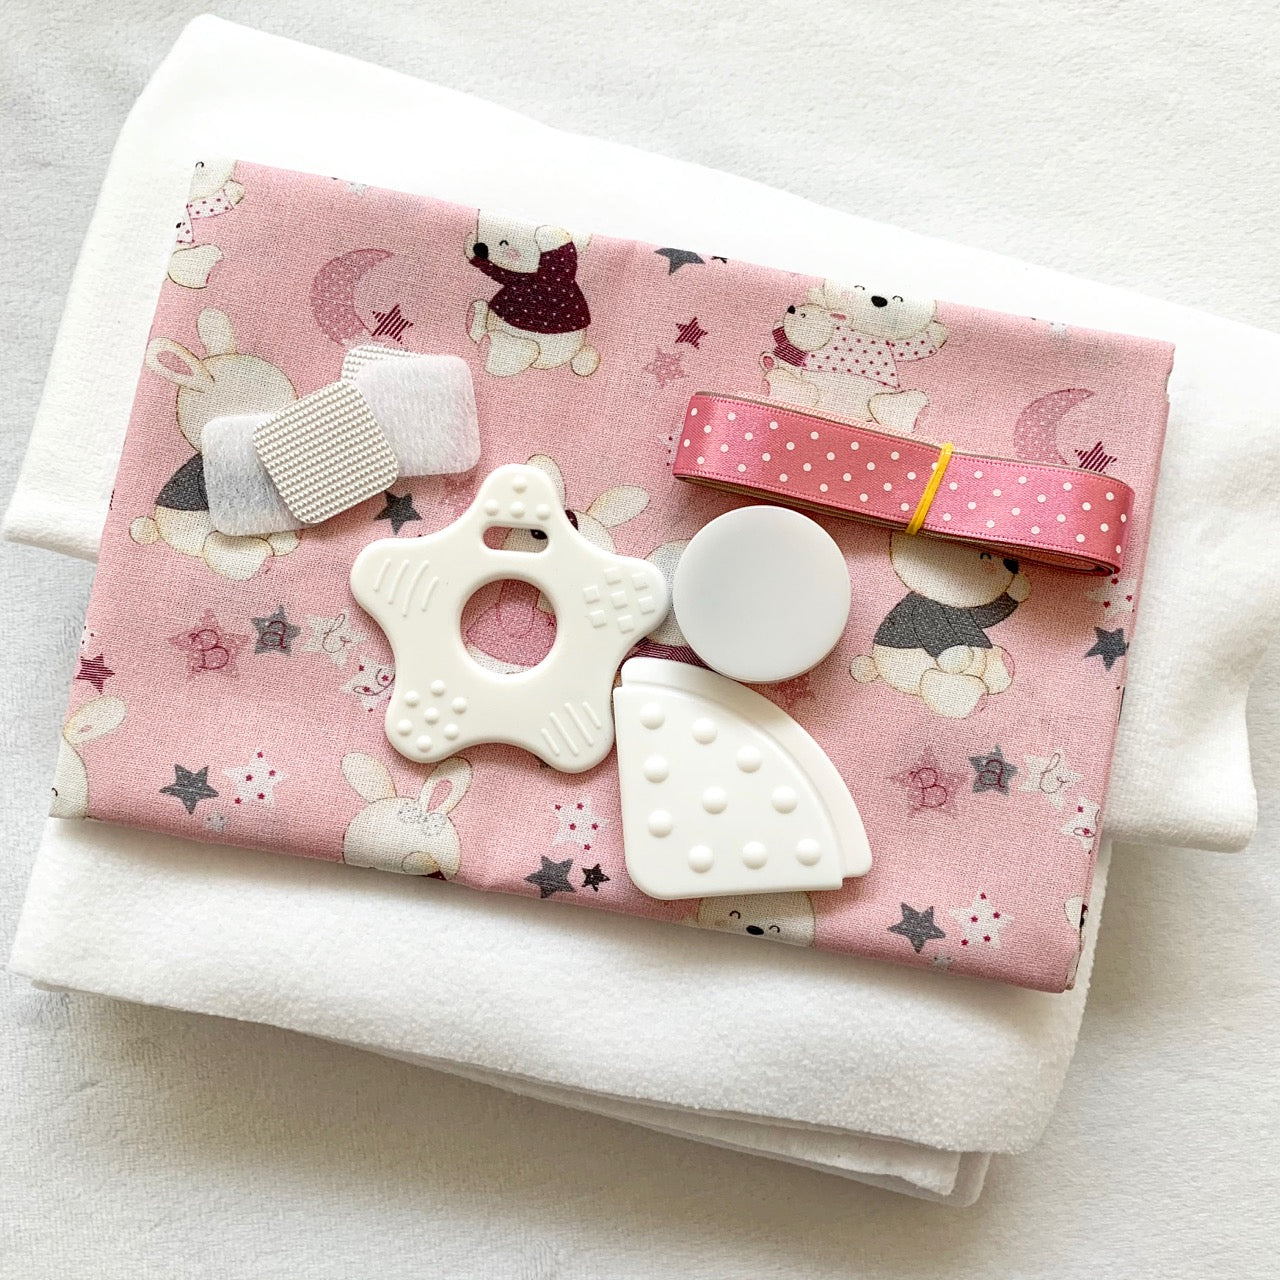 Tactile Treasures 4 piece Baby Set Sewing Kit